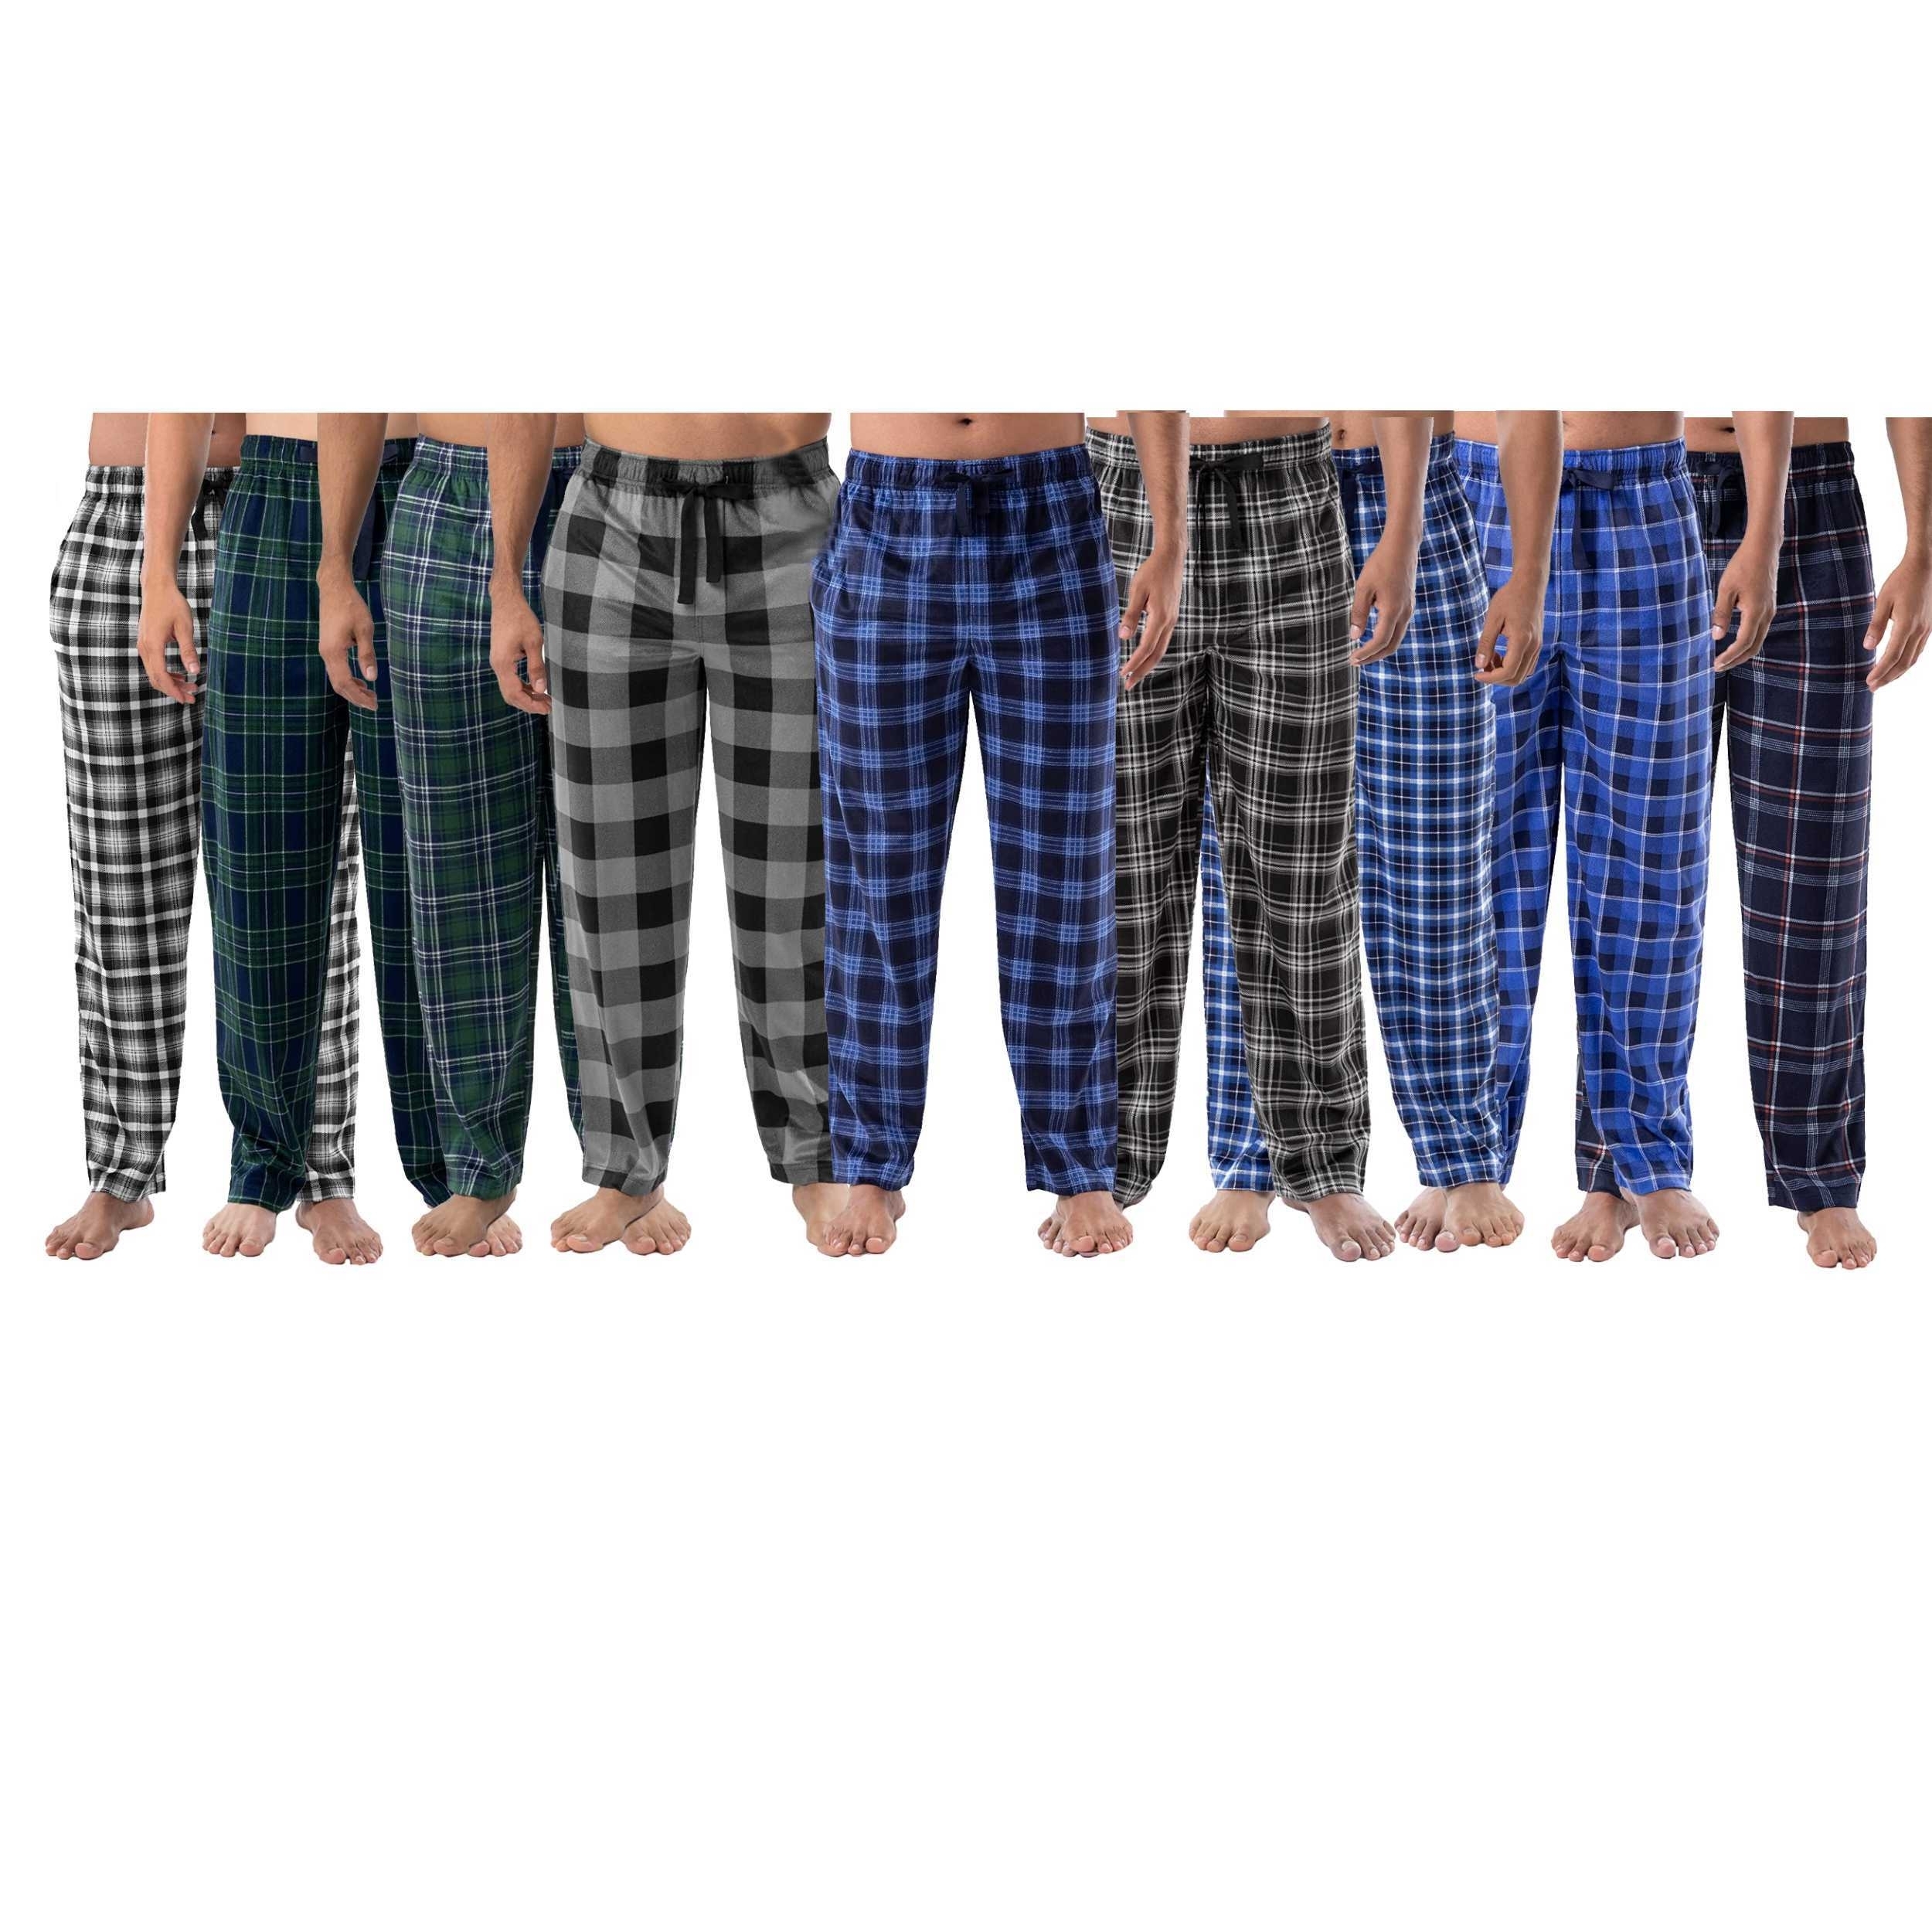 3 Pack: Men's Soft Micro Fleece Plaid Print Pajama Lounge Pants - Small